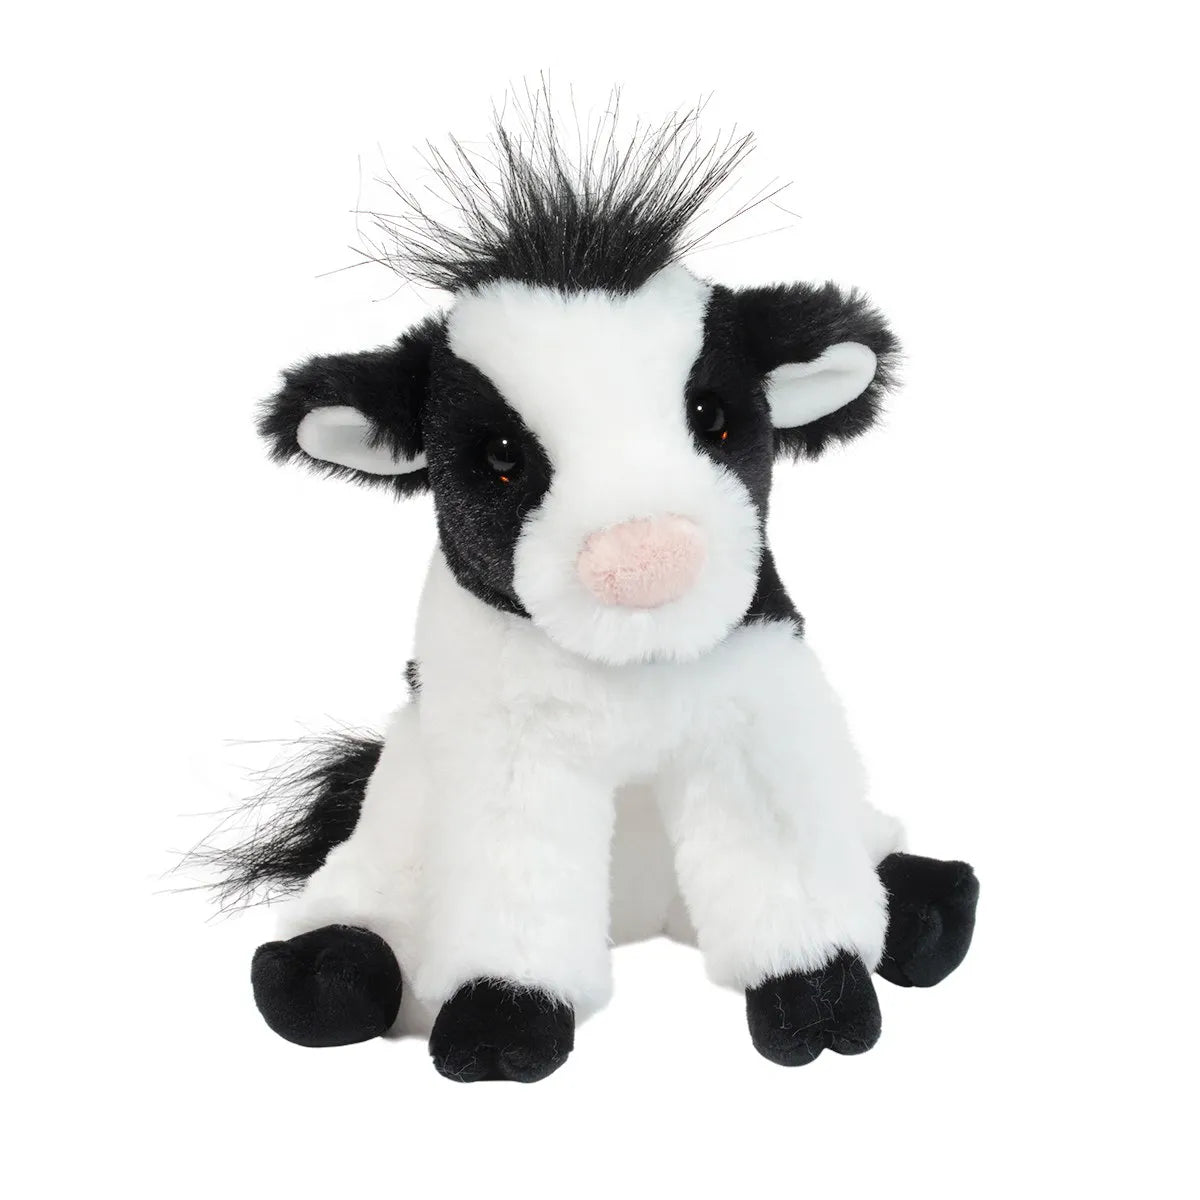 Mini Elsie the Soft Cow Plush Stuffed Animal